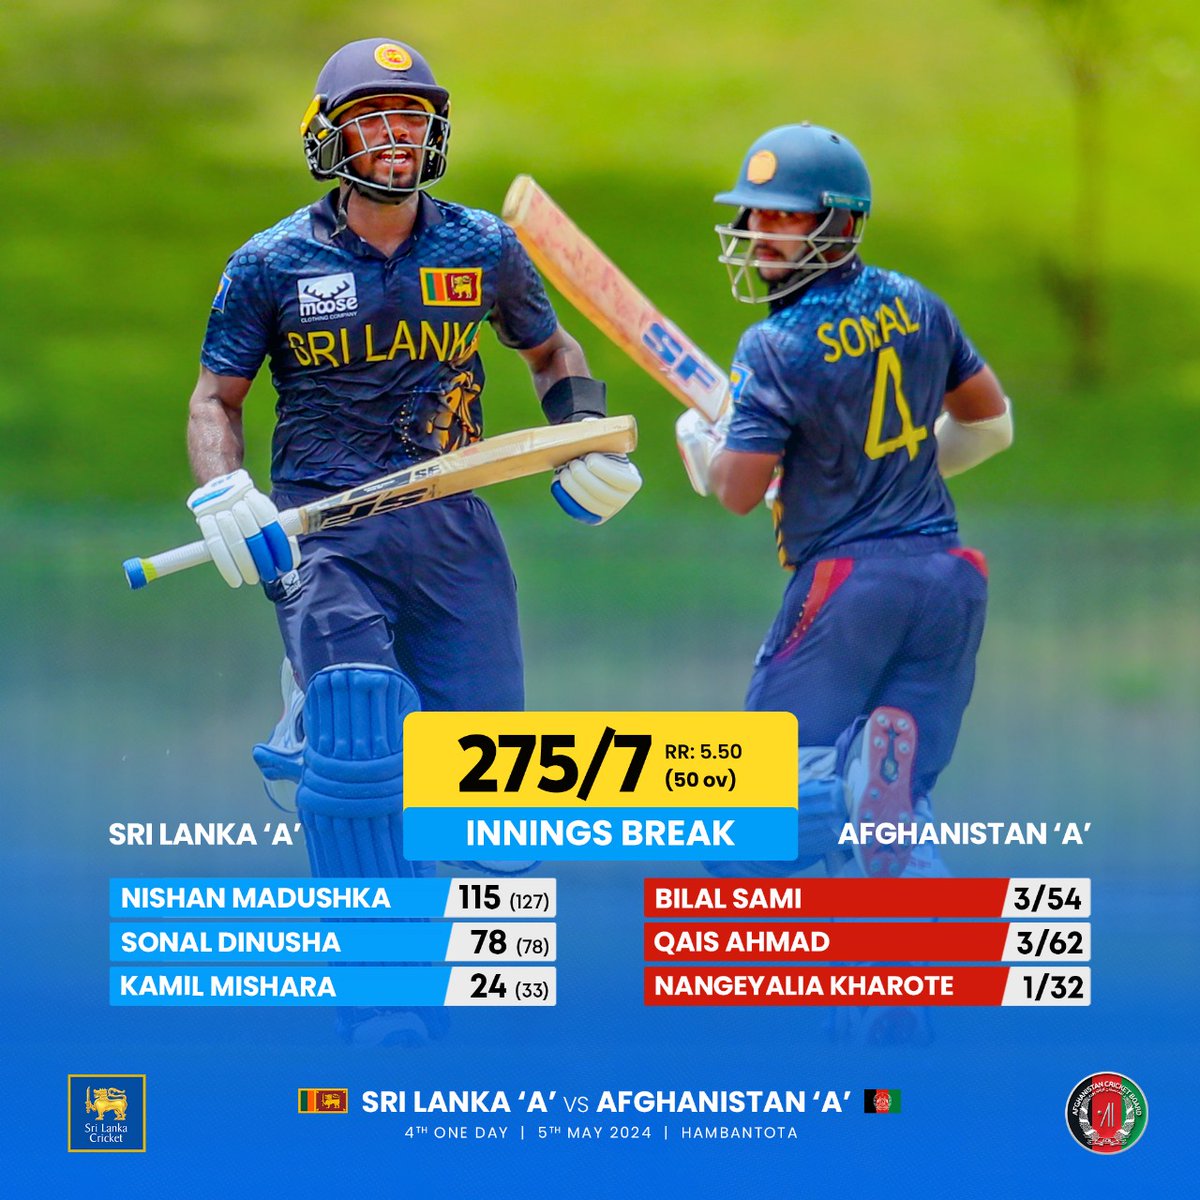 Sri Lanka A post a competitive 275/7 on the board! 

Nishan Madushka (115) and Sonal Dinusha (78) lead the way with brilliant knocks. 👏

#SLATeam #SLvAFG